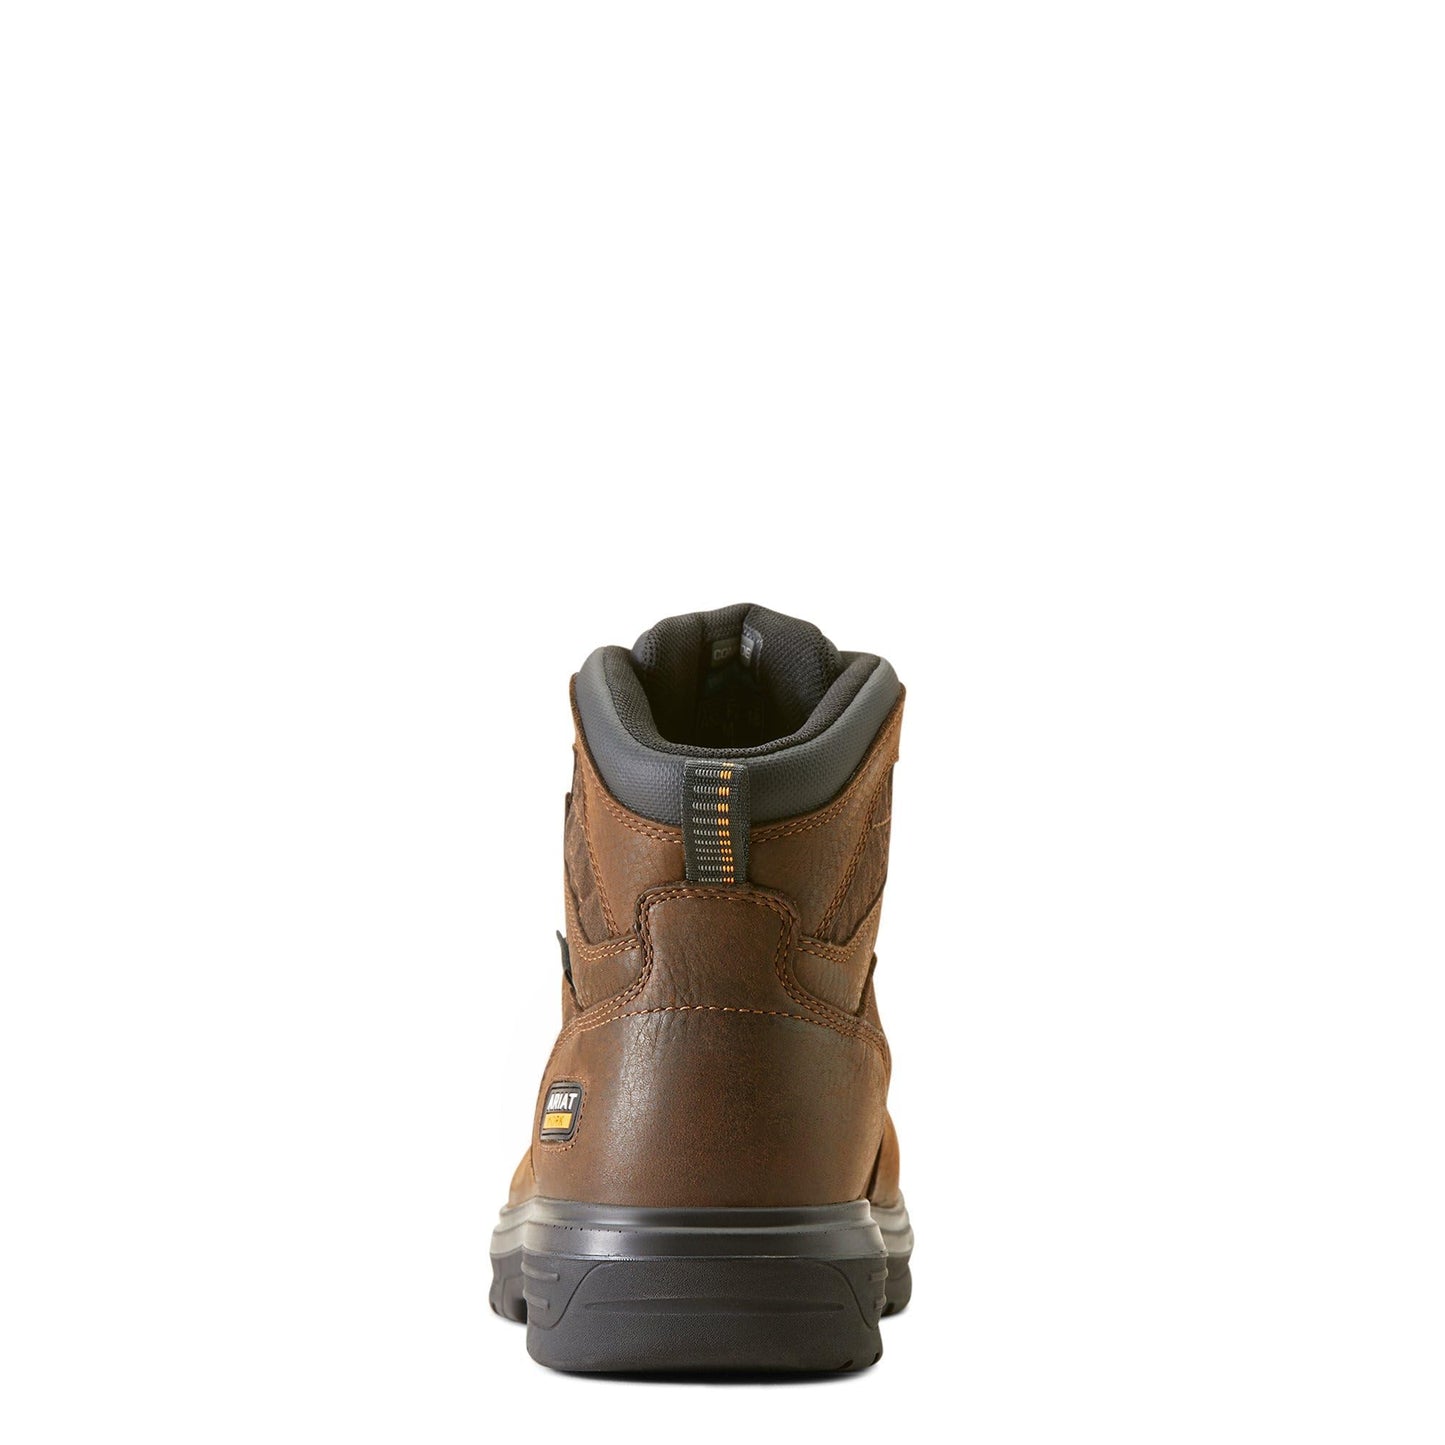 Ariat Men's Turbo 6" Waterproof Carbon Toe Work Boot Industrial, Rich Brown, 14 Wide